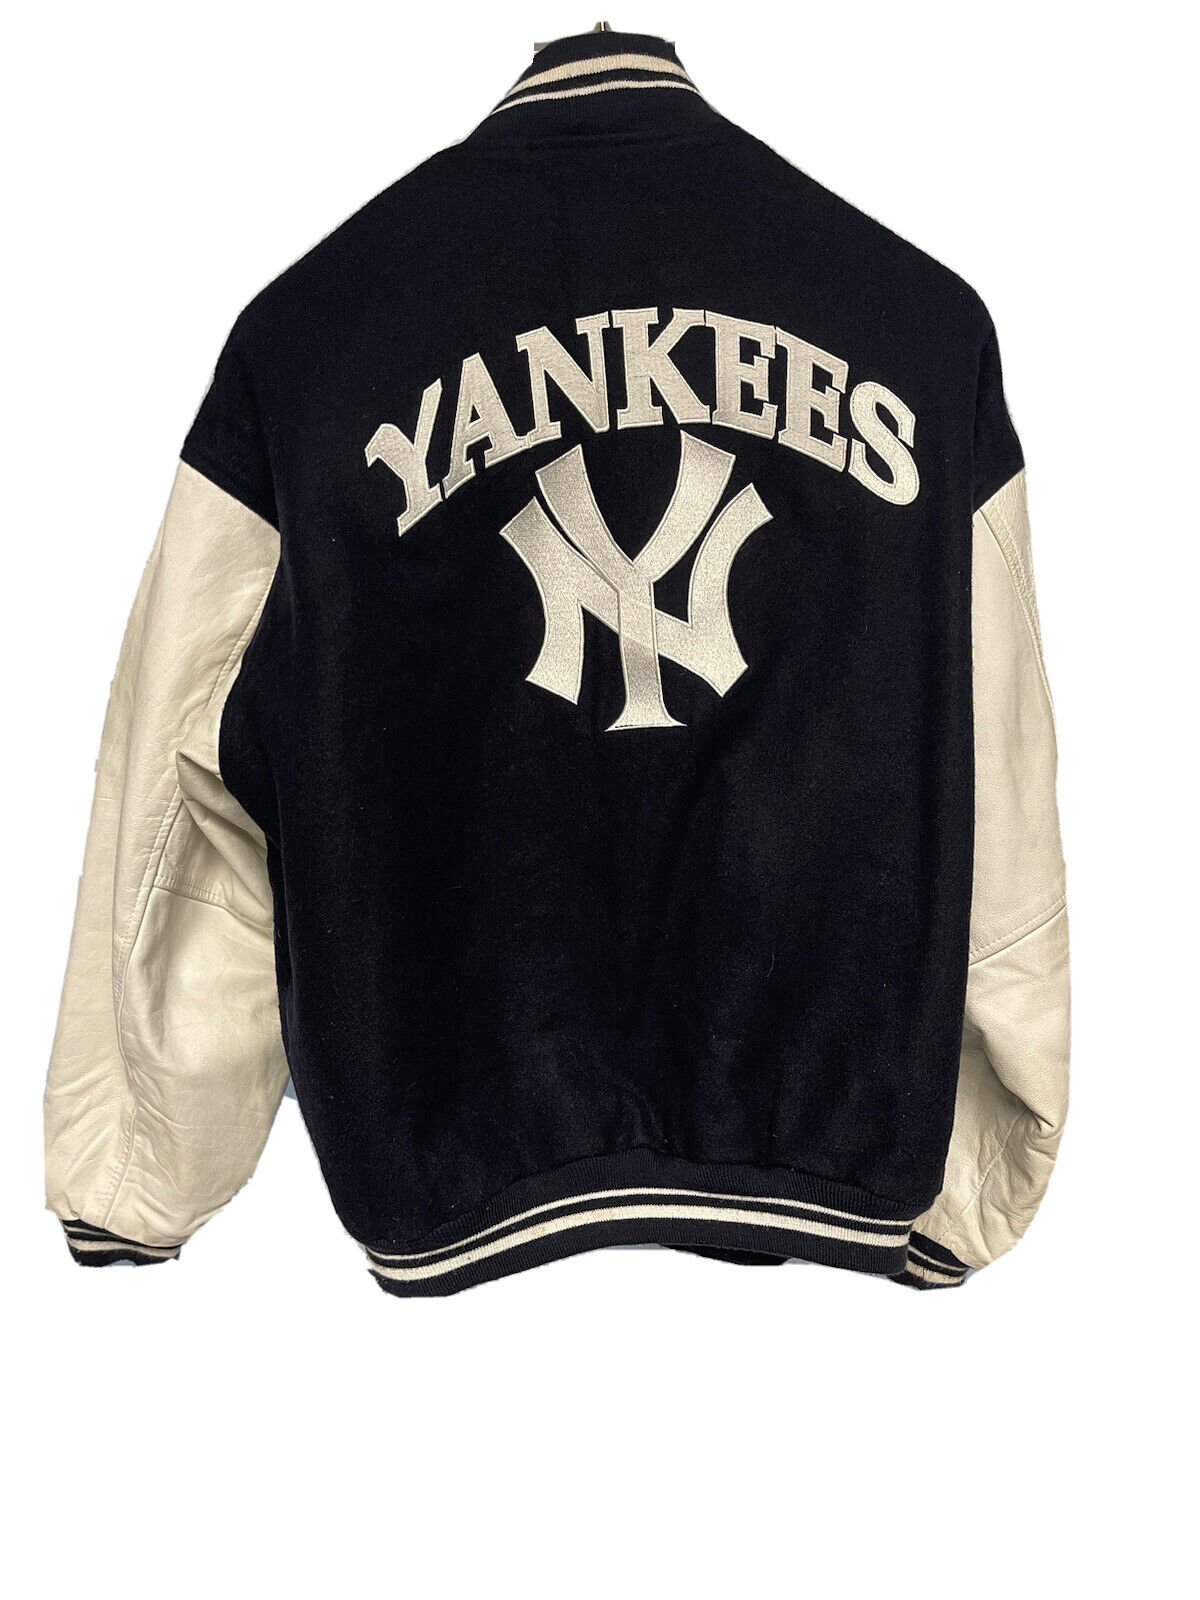 Vintage Mirage Yankees Wool Leather Jacket Size L | eBay